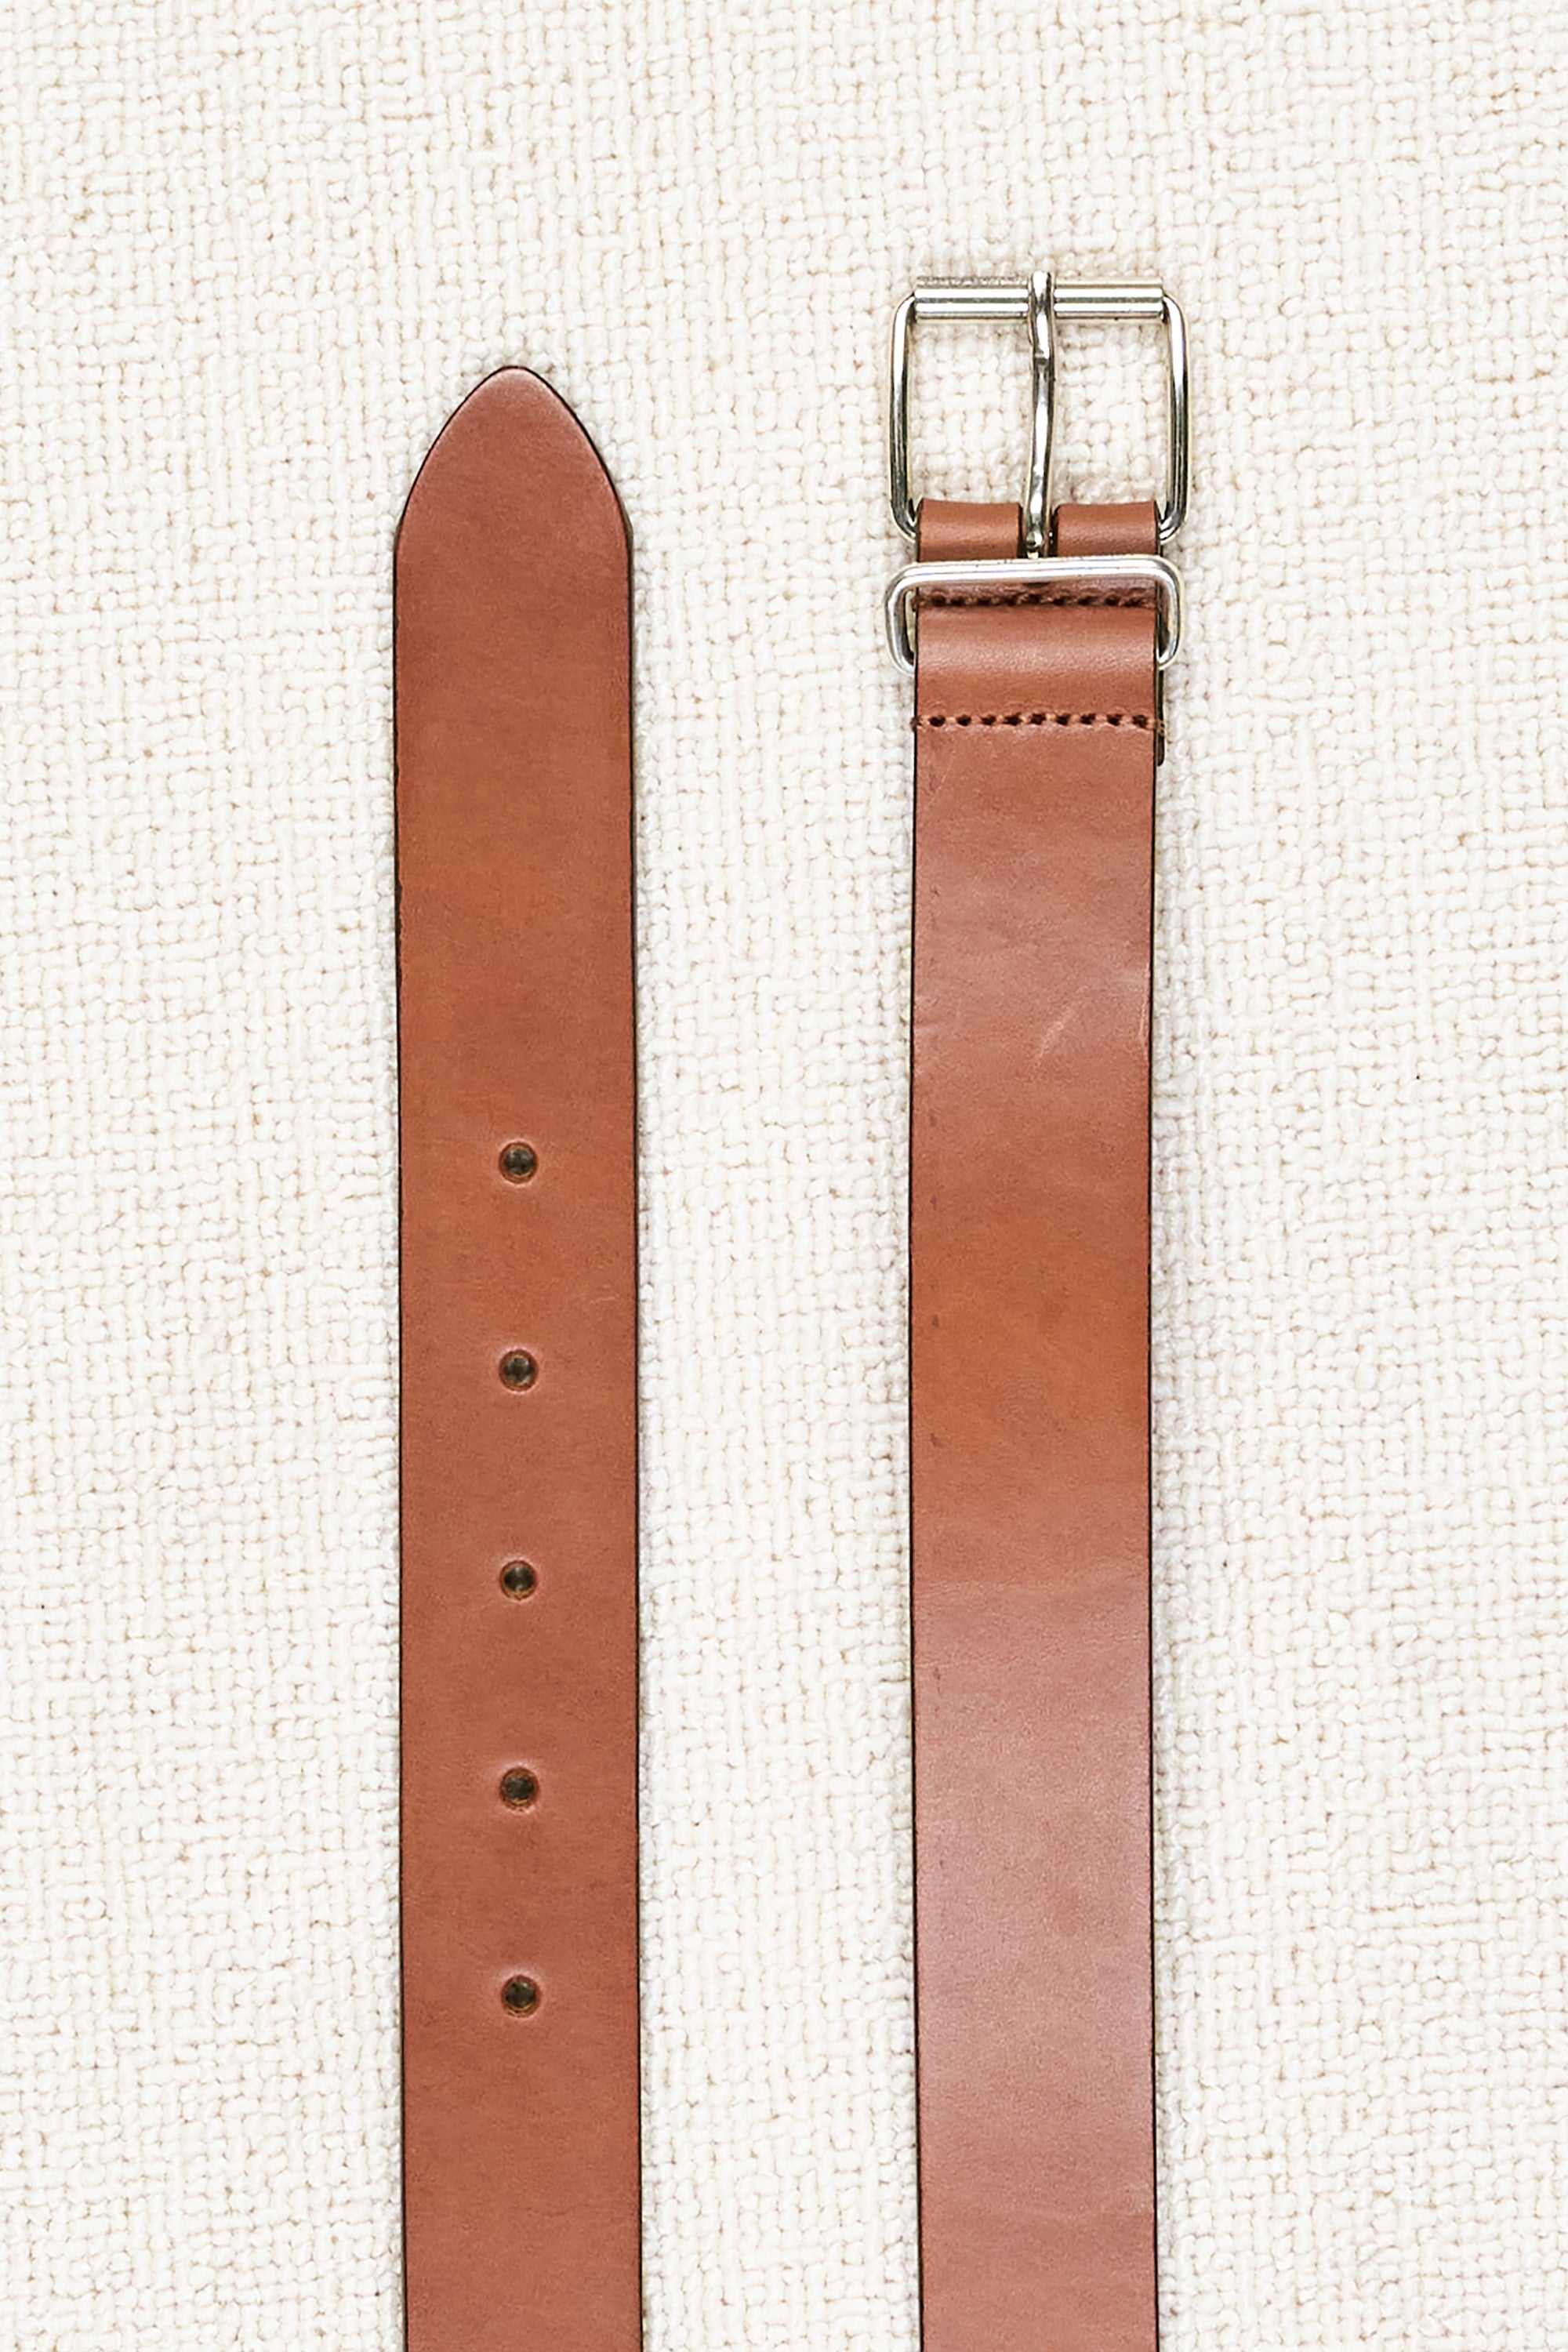 Anderson's Brown A/952 Calf Belt